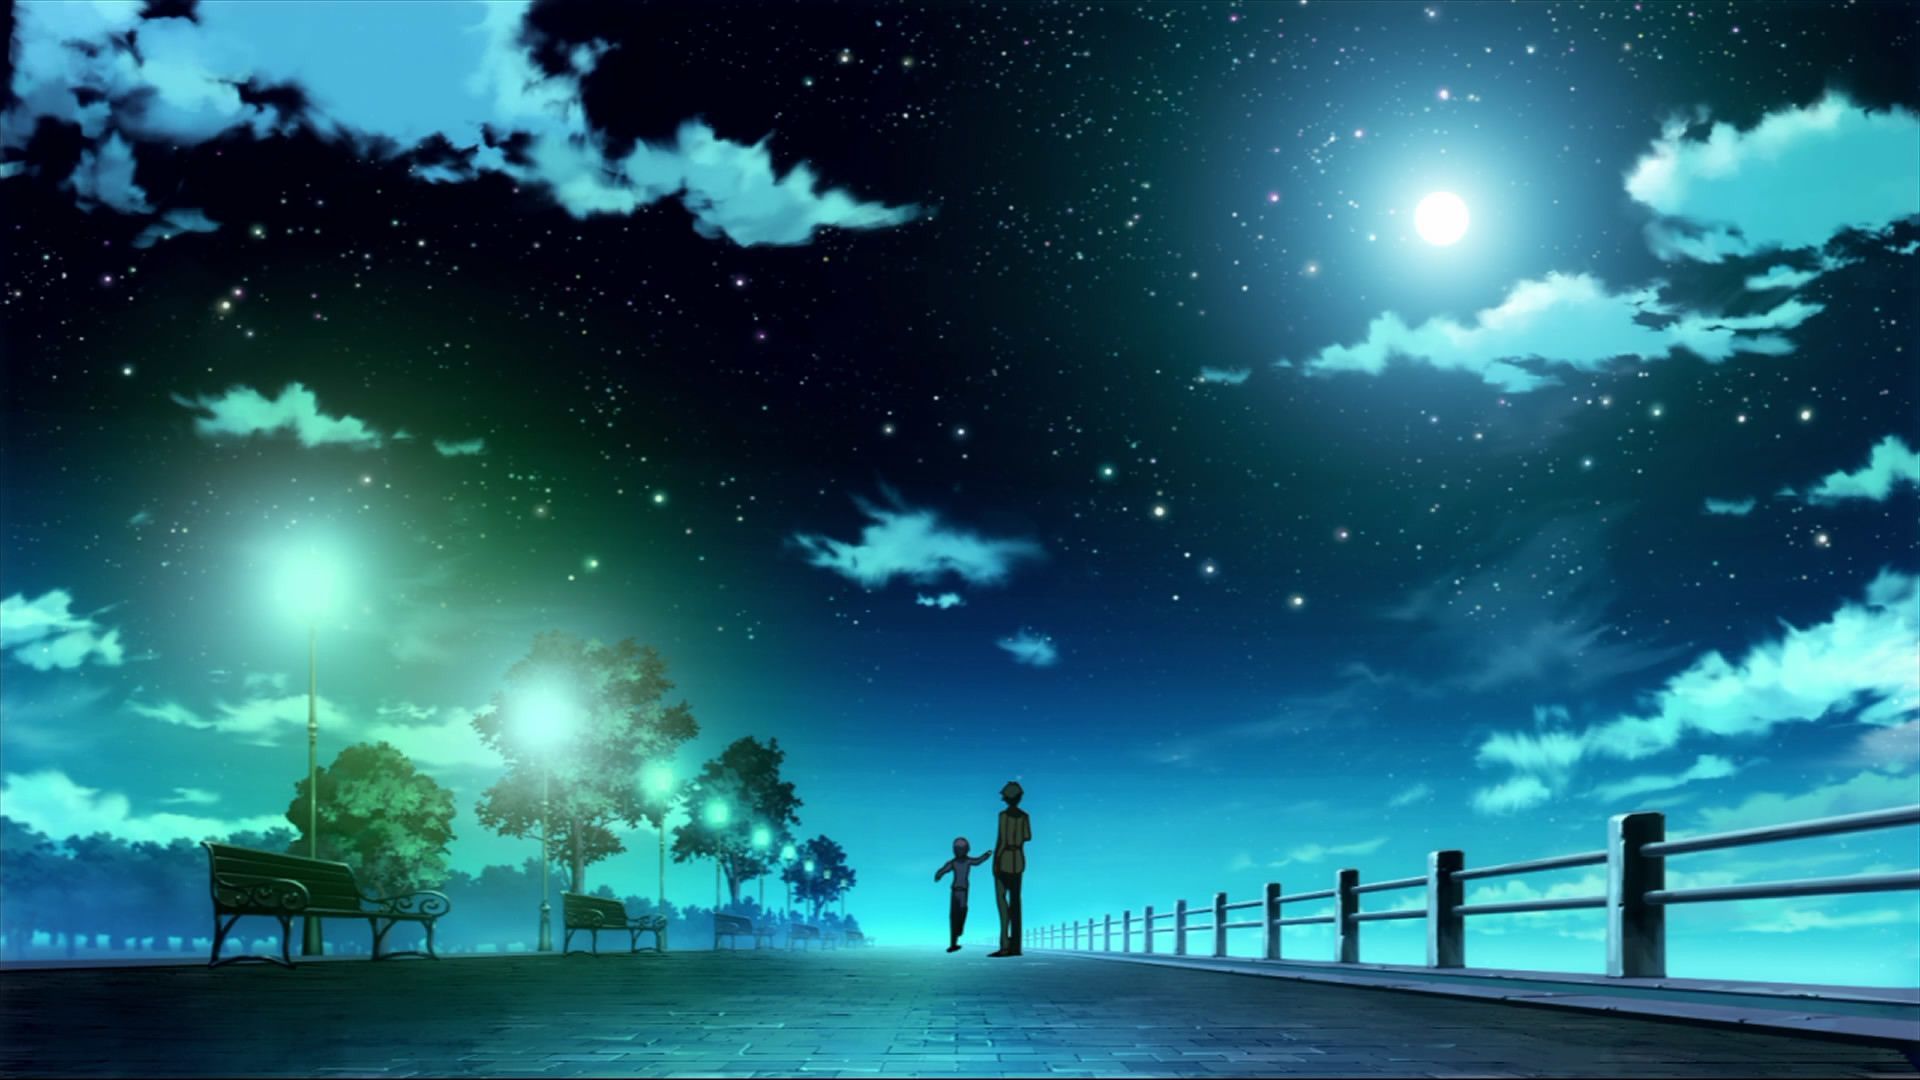 justpict.com Anime Night Sky Wallpaper. Night sky